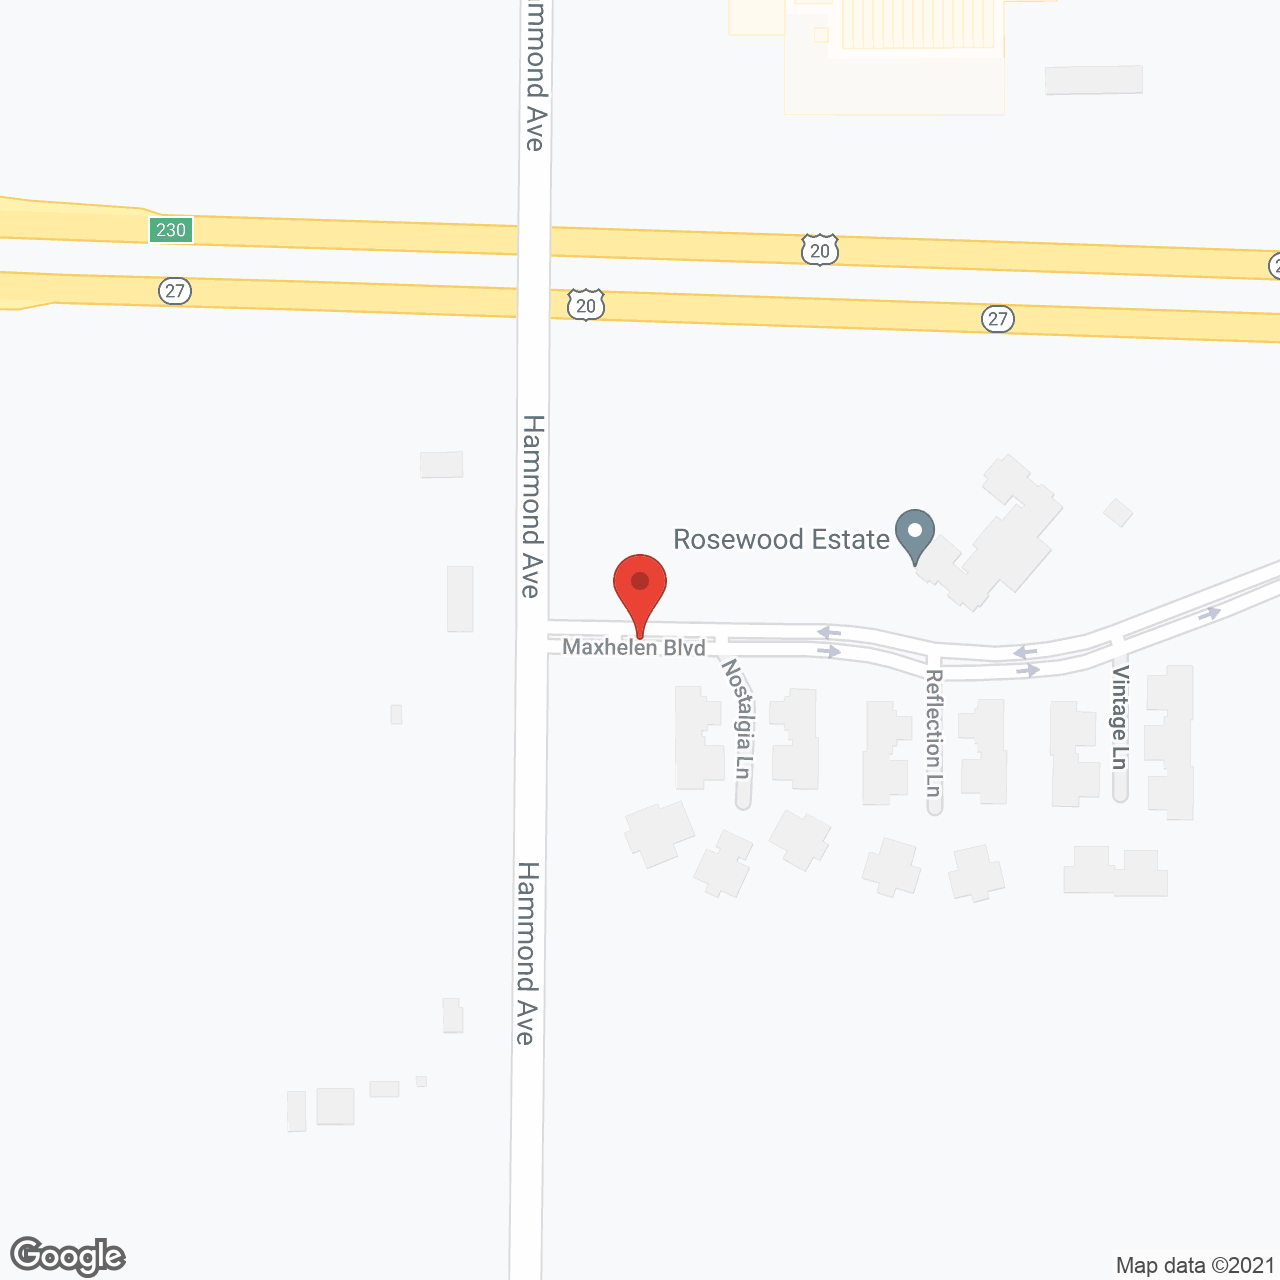 Rosewood Estate in google map